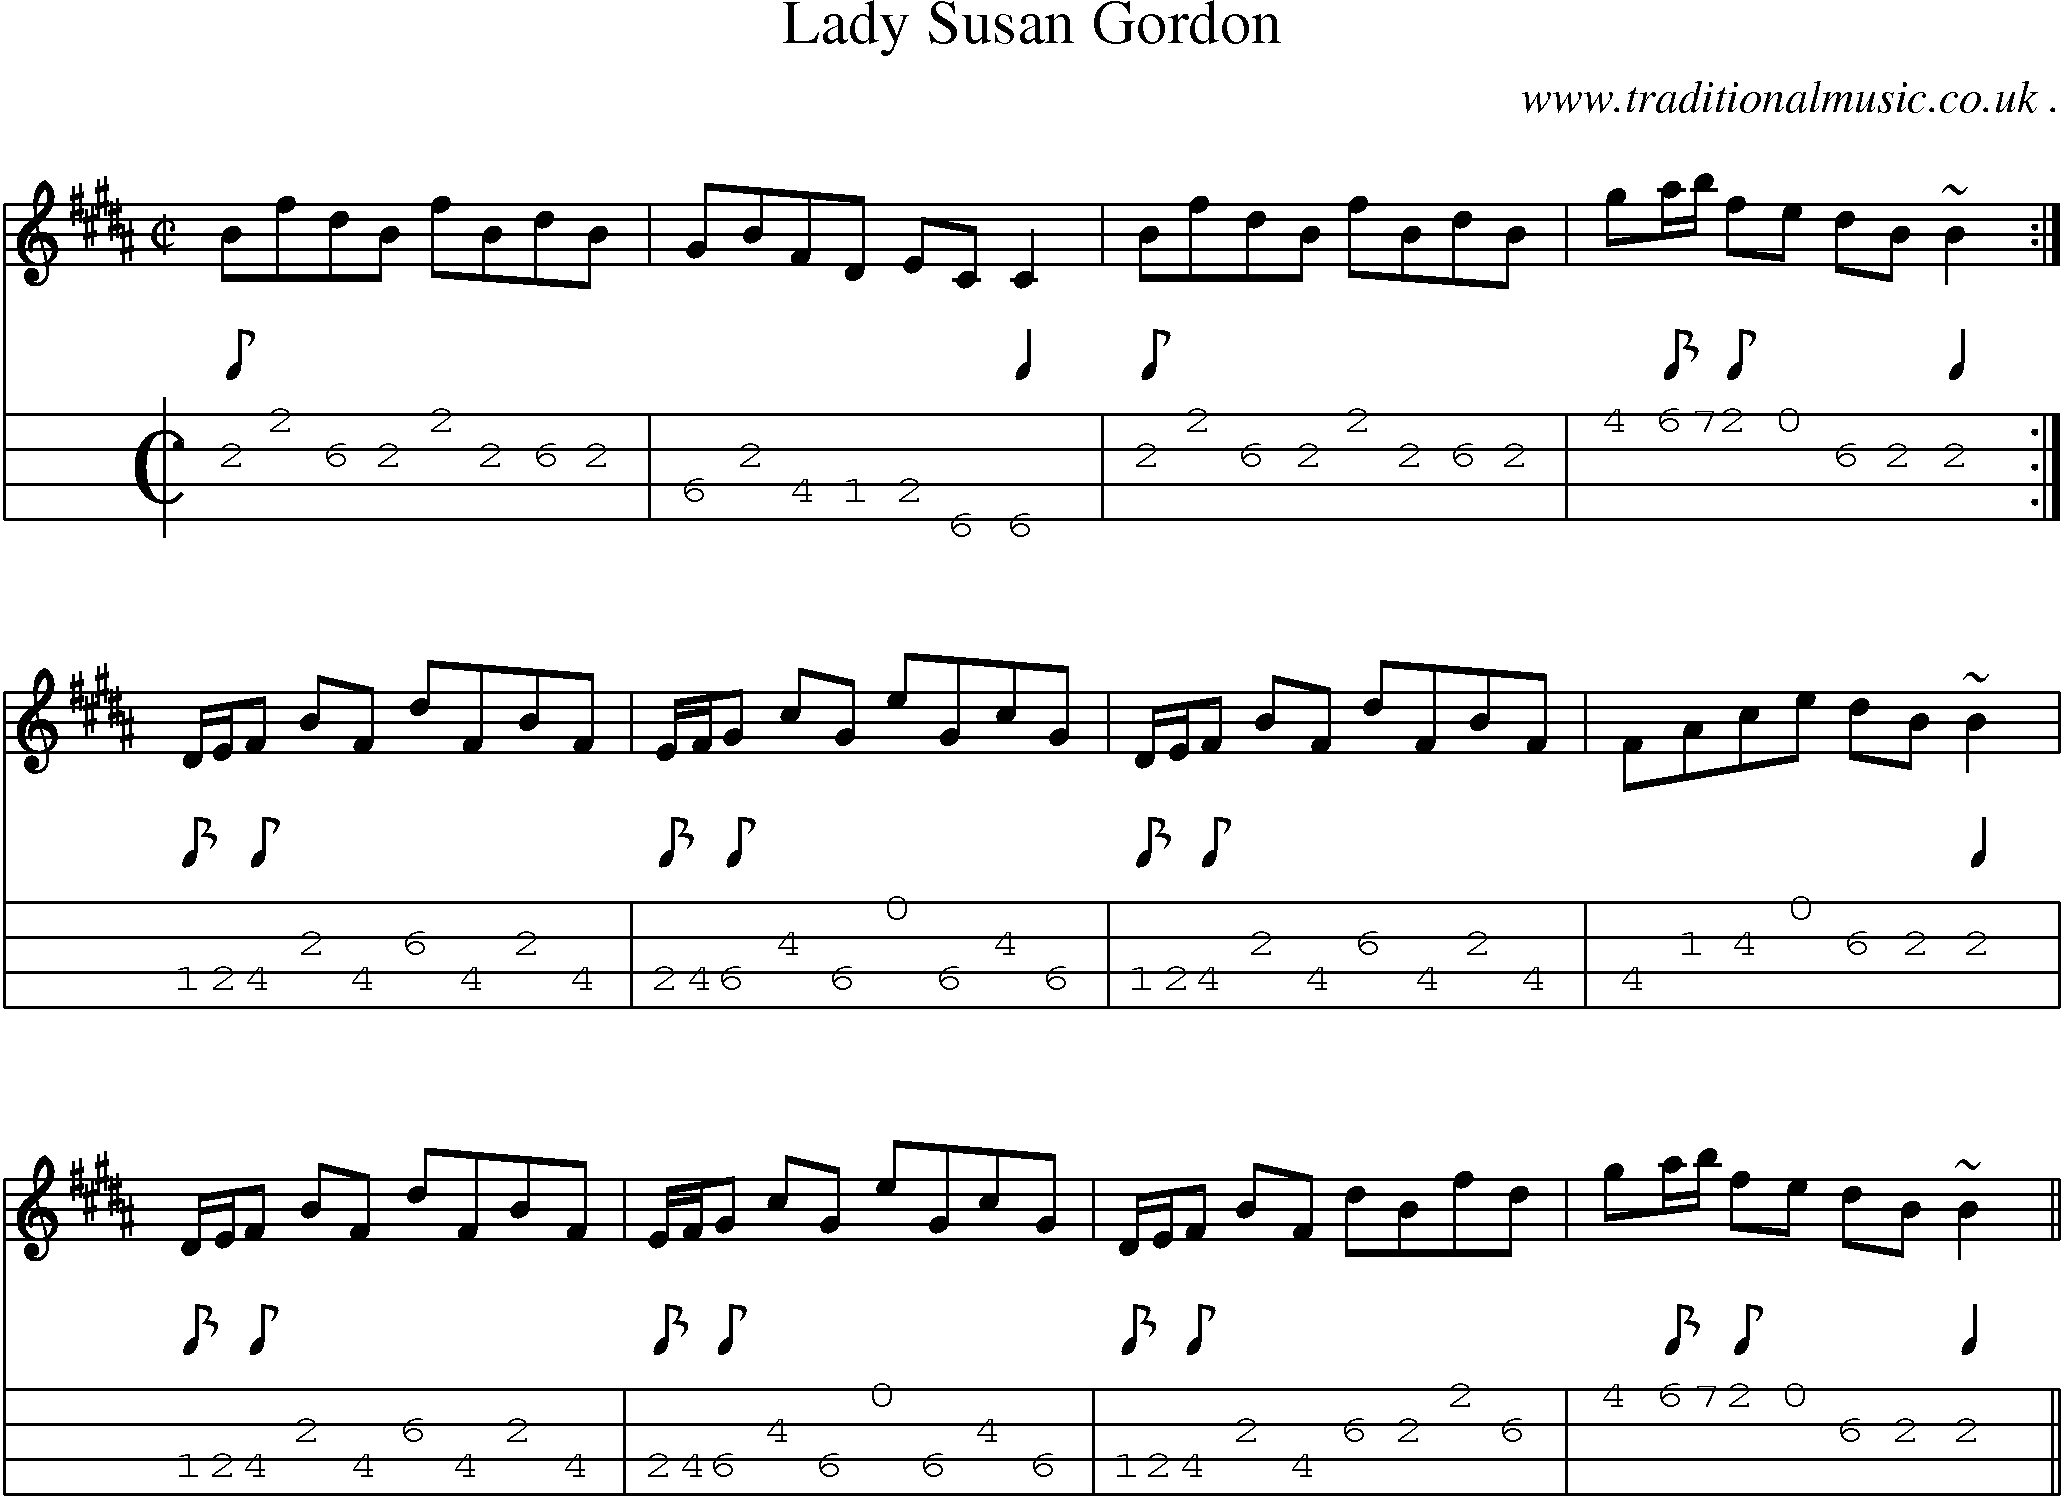 Sheet-music  score, Chords and Mandolin Tabs for Lady Susan Gordon